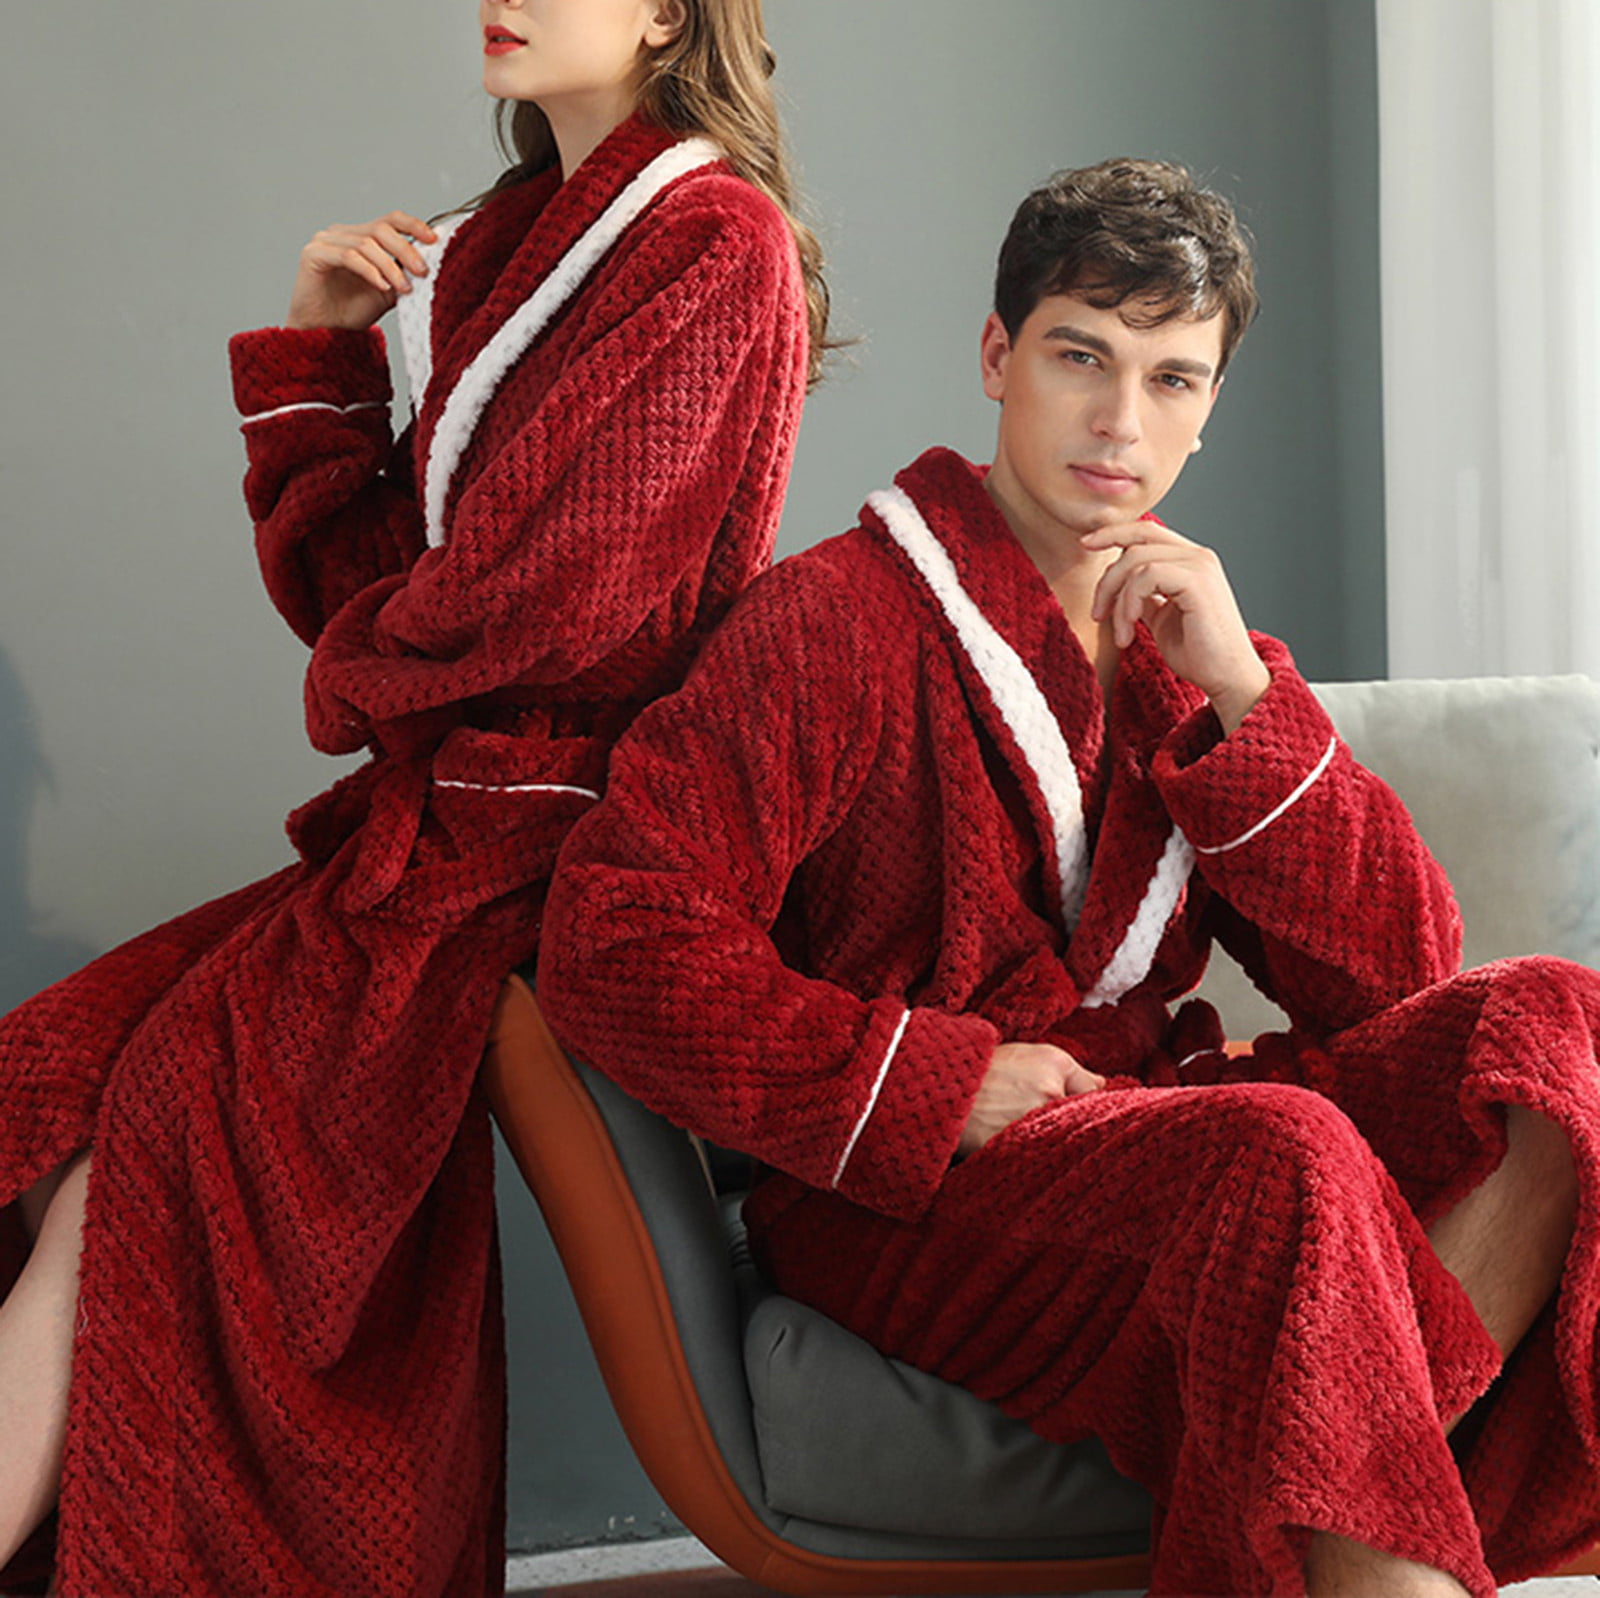 Women's Men's Soft & Cozy Fleece Dressing Gown Long Sleeve Bathrobe Robes  J1